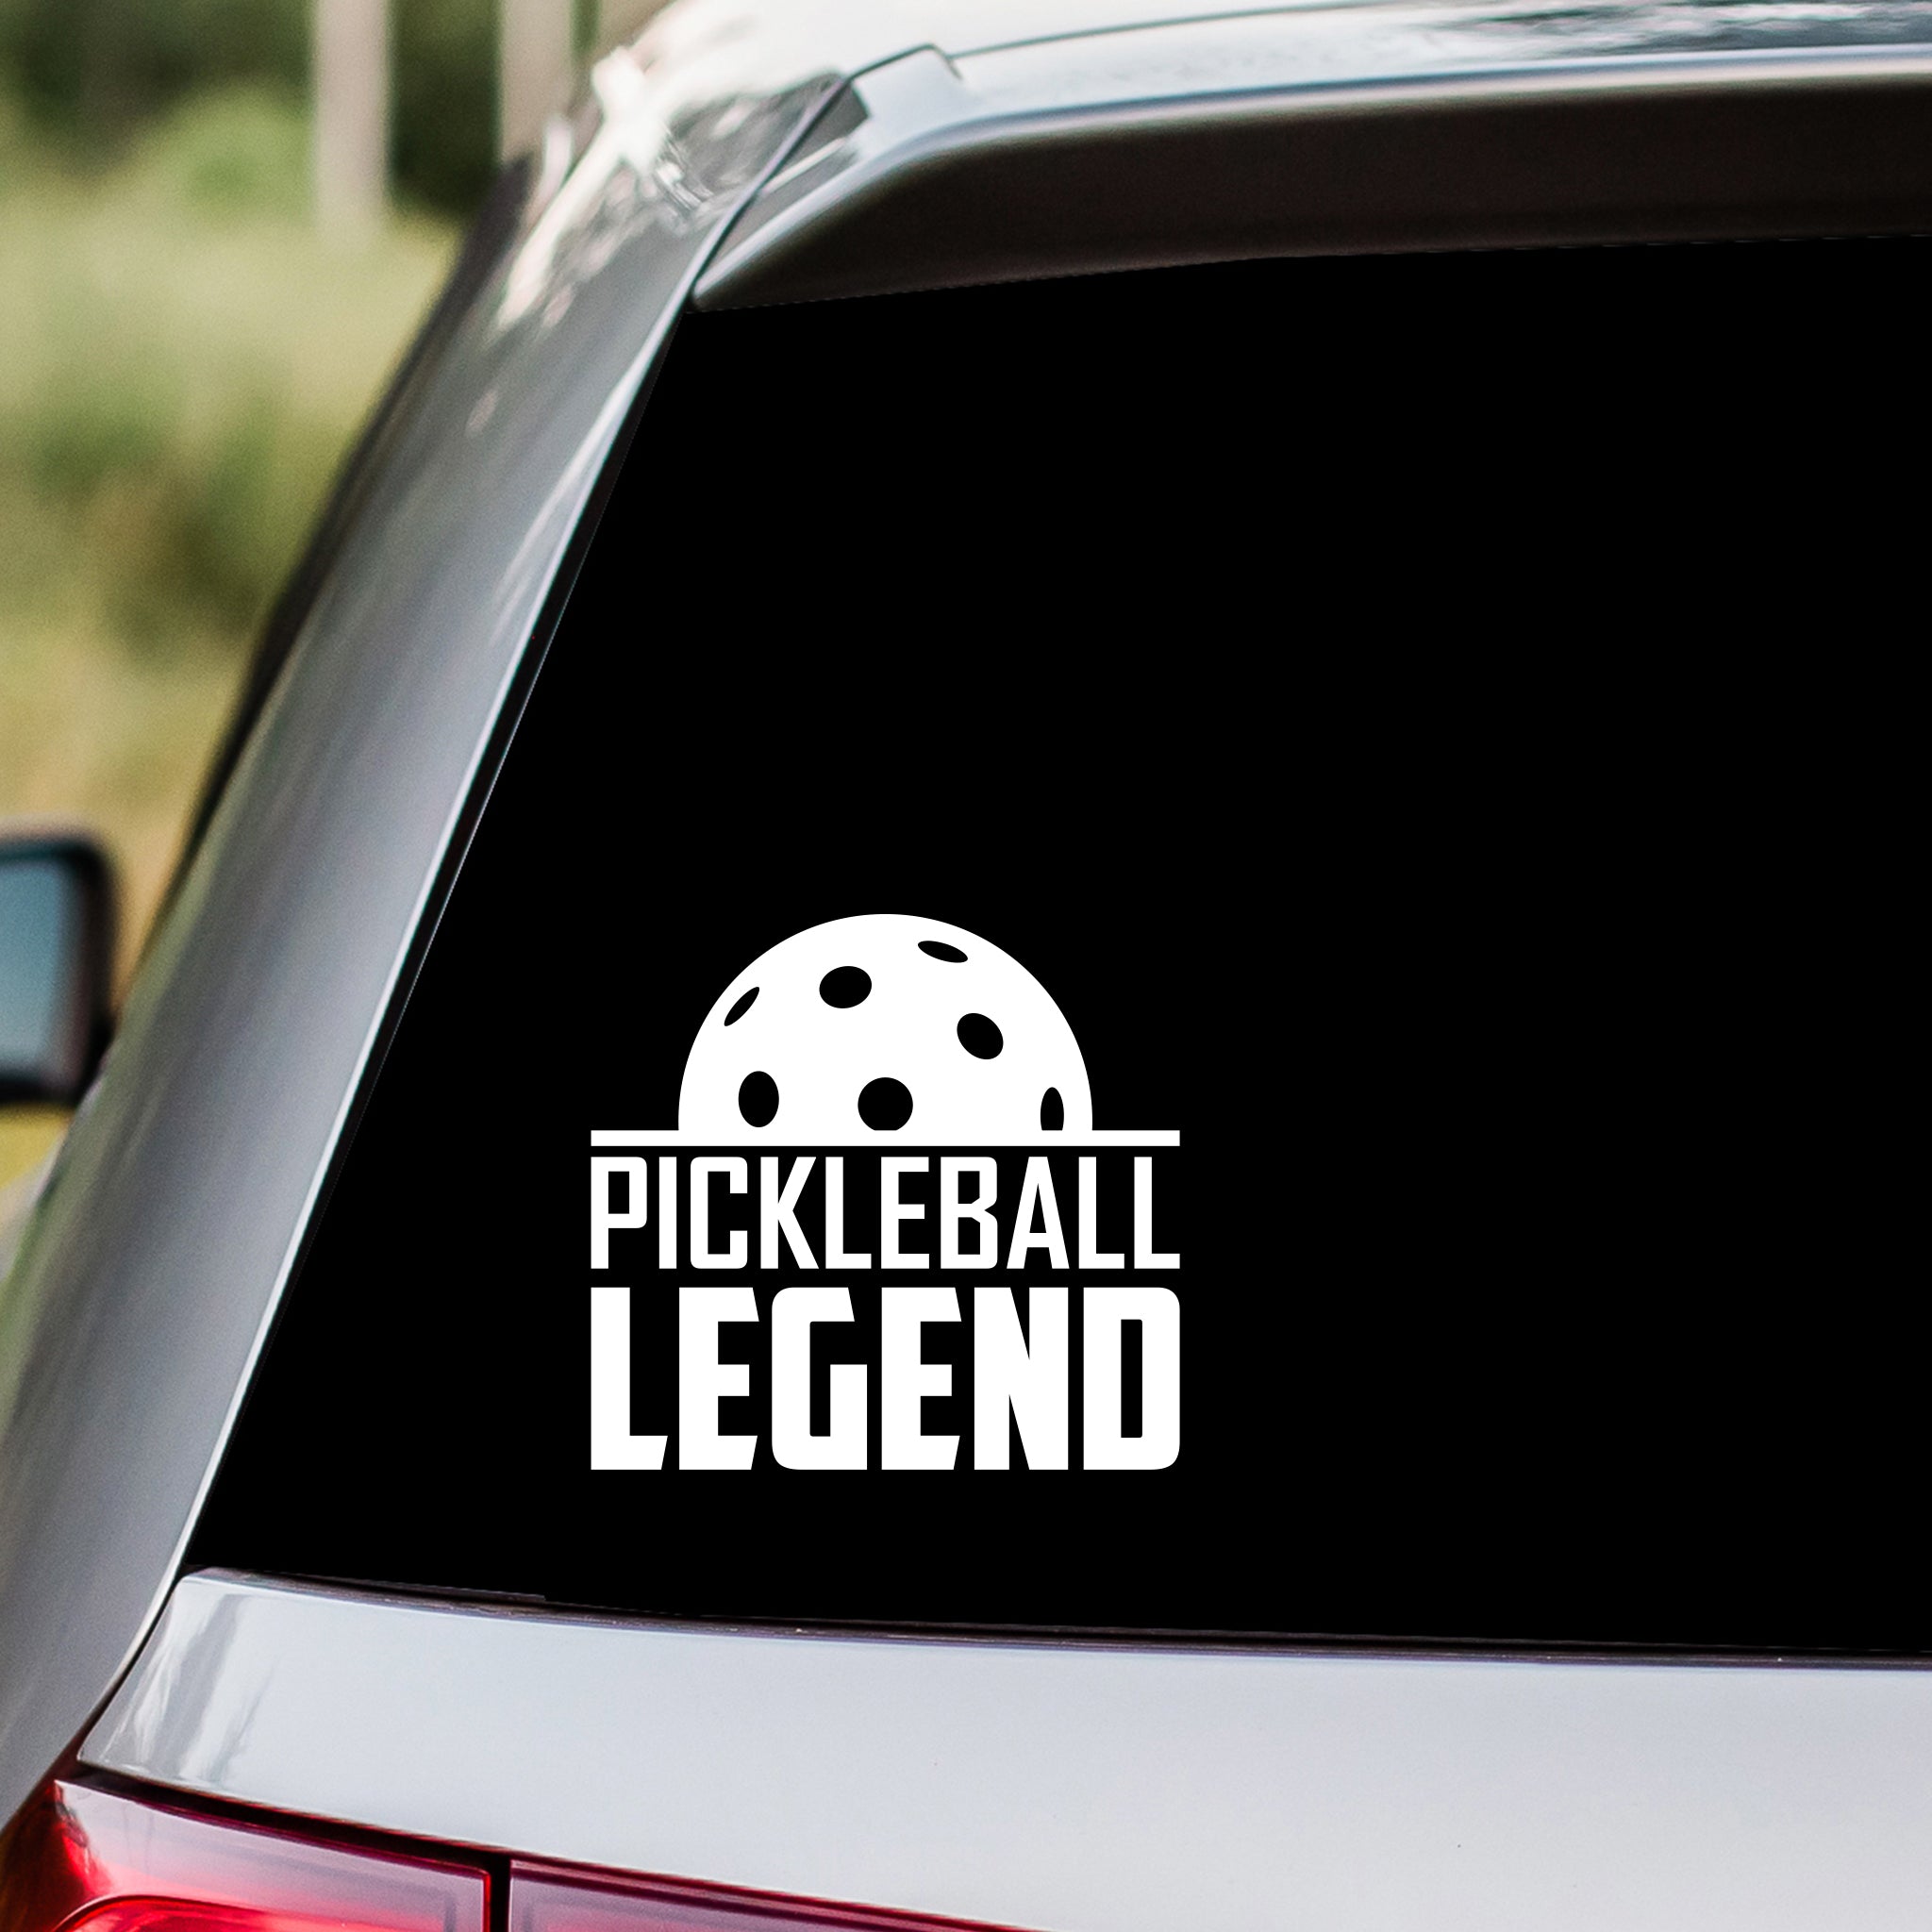 Pickleball Legend Decal Sticker